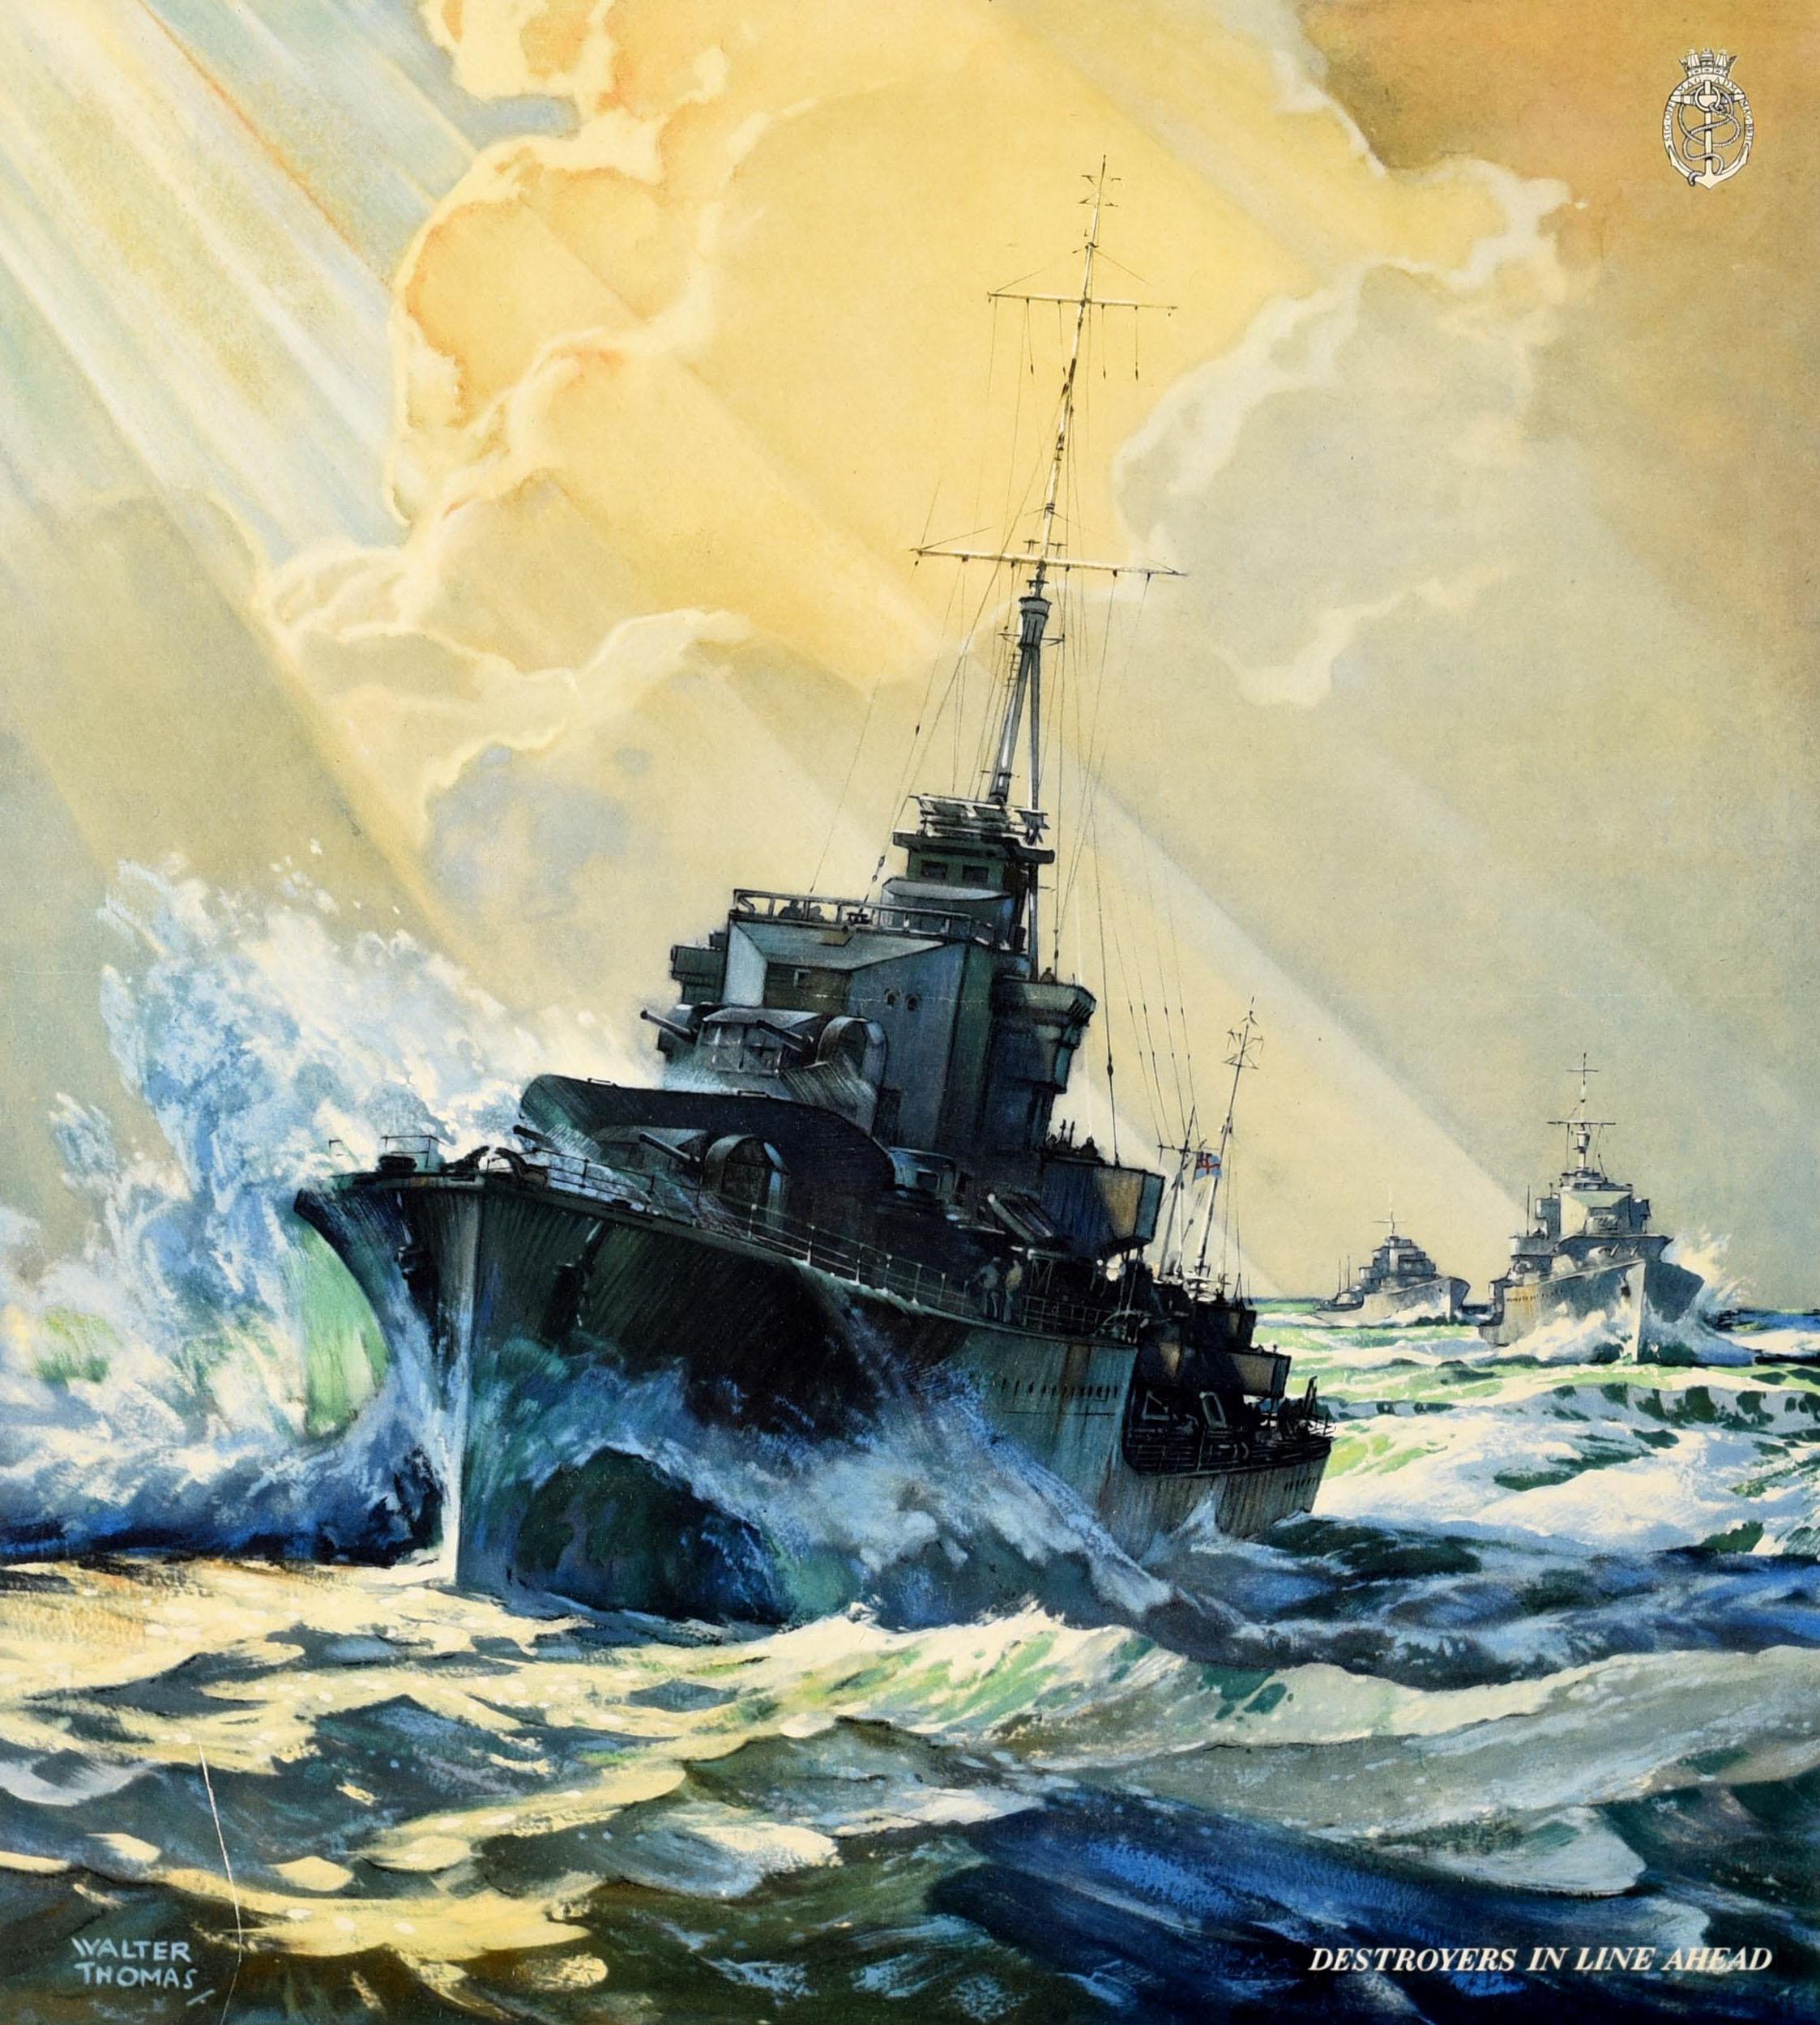 Original Vintage World War Two Poster Britain's Sea Power Savings Navy Ship WWII - Print by Walter Thomas